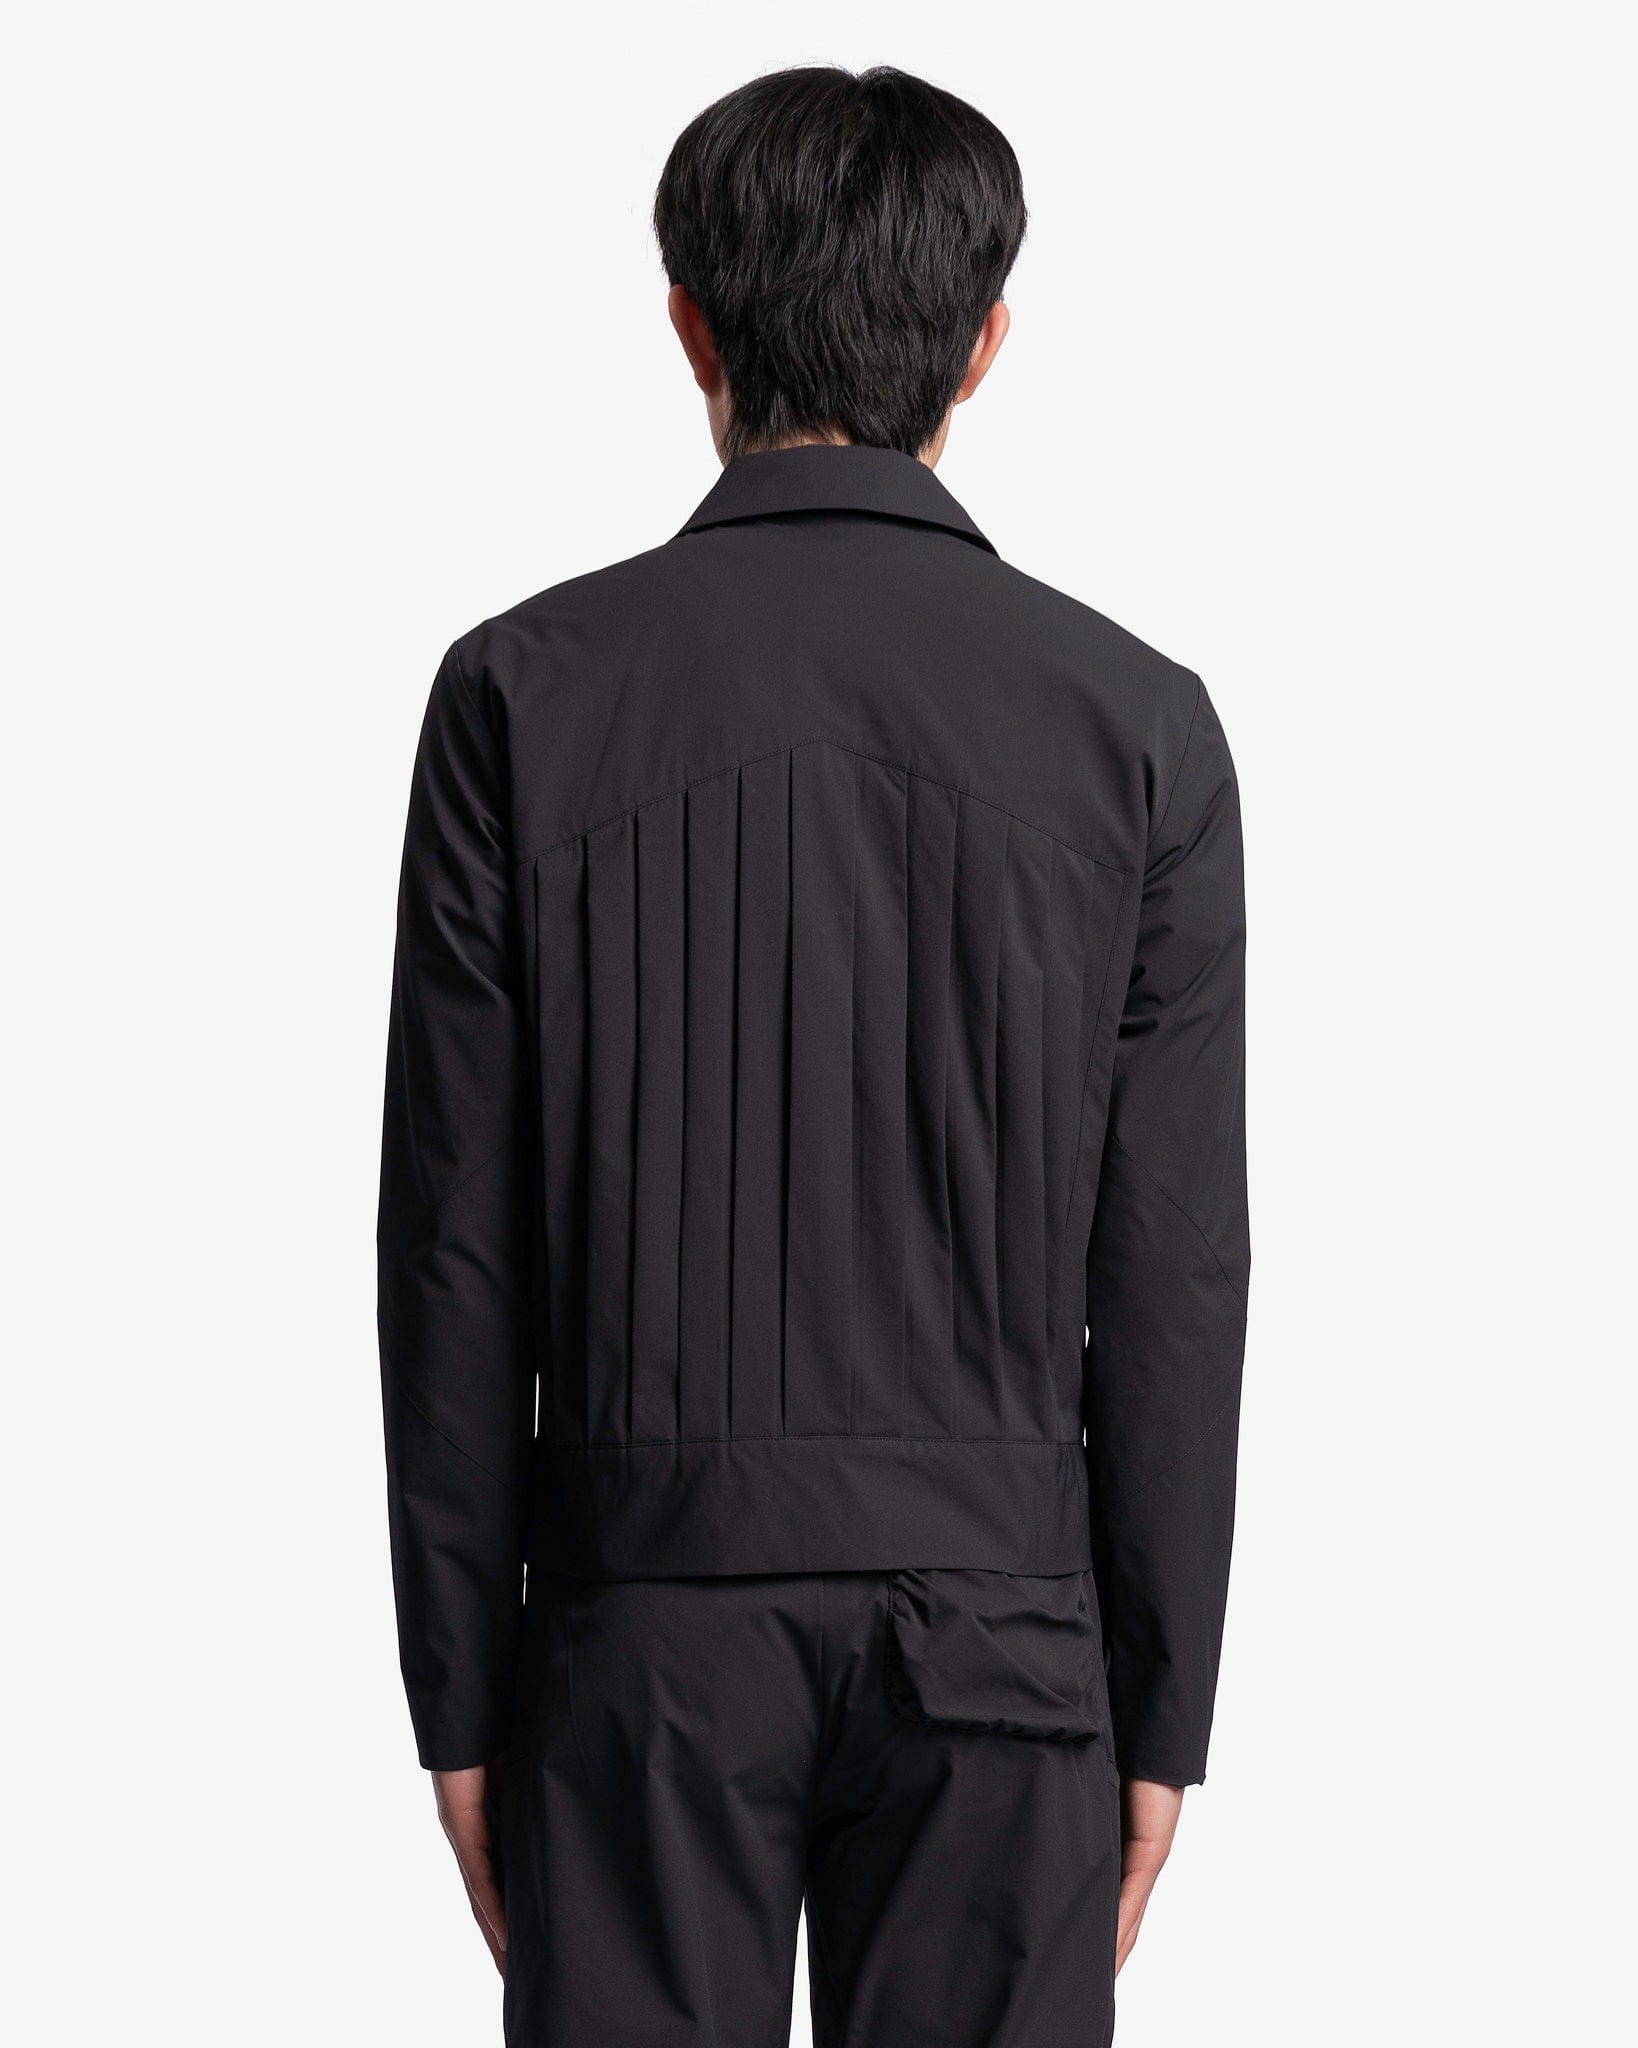 Uncertain Factor Men's Jackets Multi-Structured Shirt Collar Jacket in Black